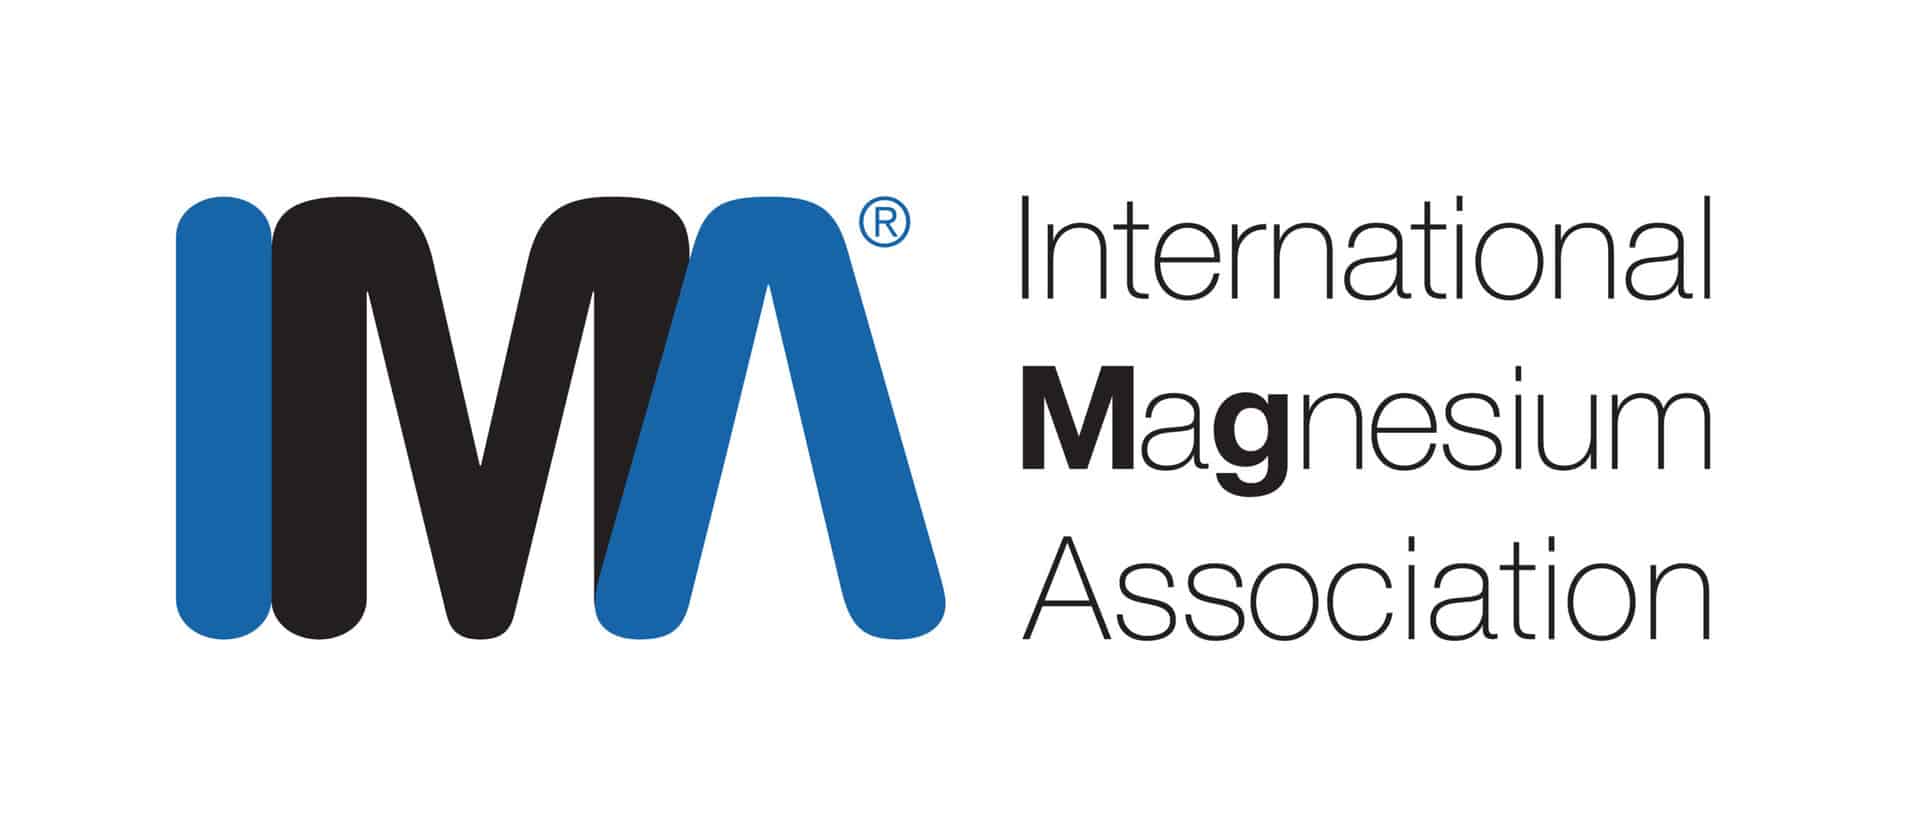 International Magnesium Association log featuring in itials IMA in blue, black, blue